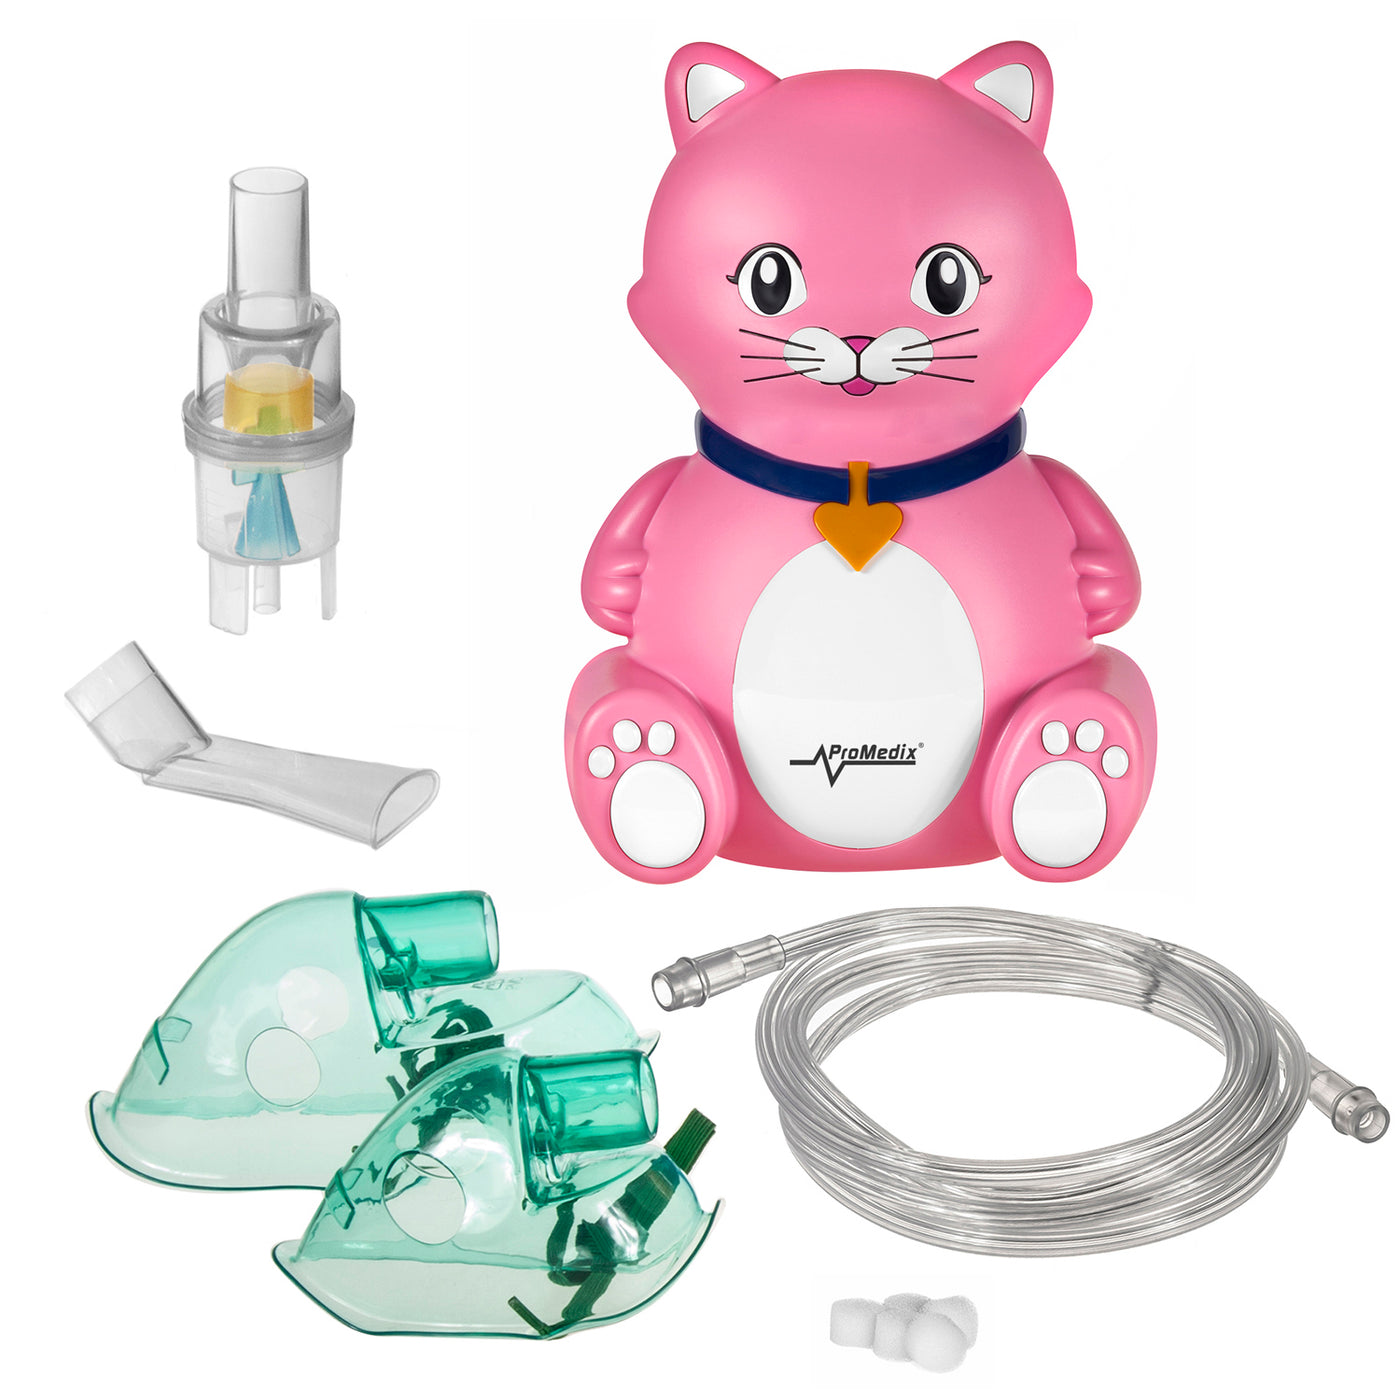 Inhalator dla dzieci kot Promedix PR-816, zestaw nebulizator, maski, filterki